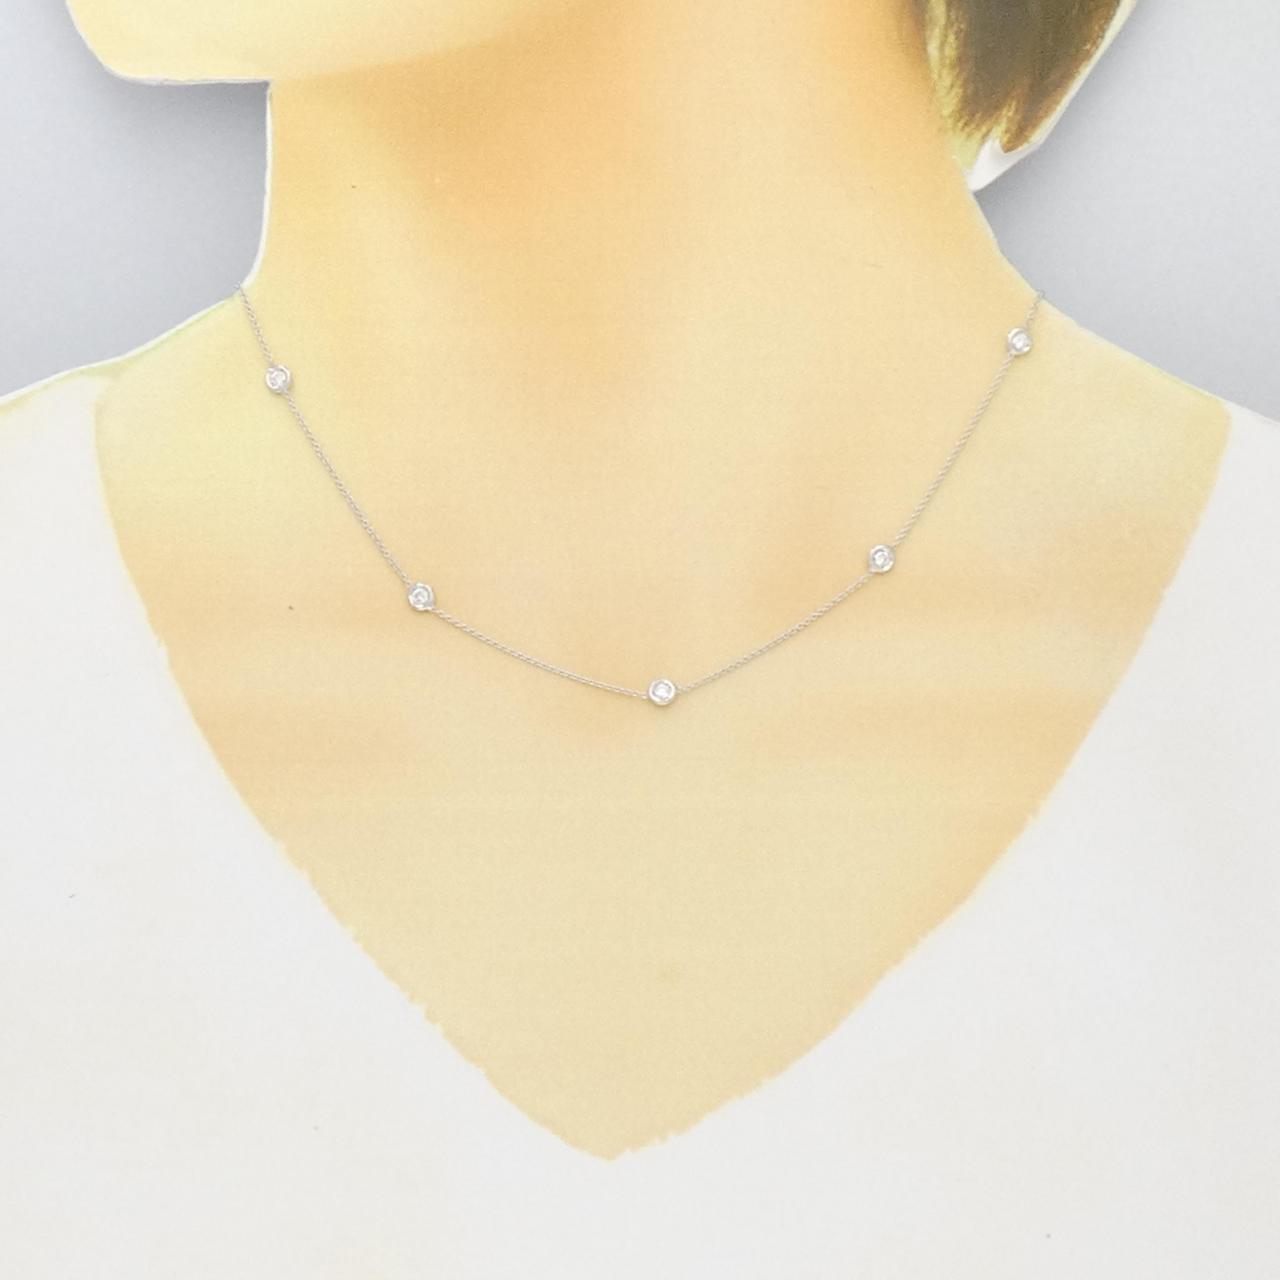 750WG Diamond necklace